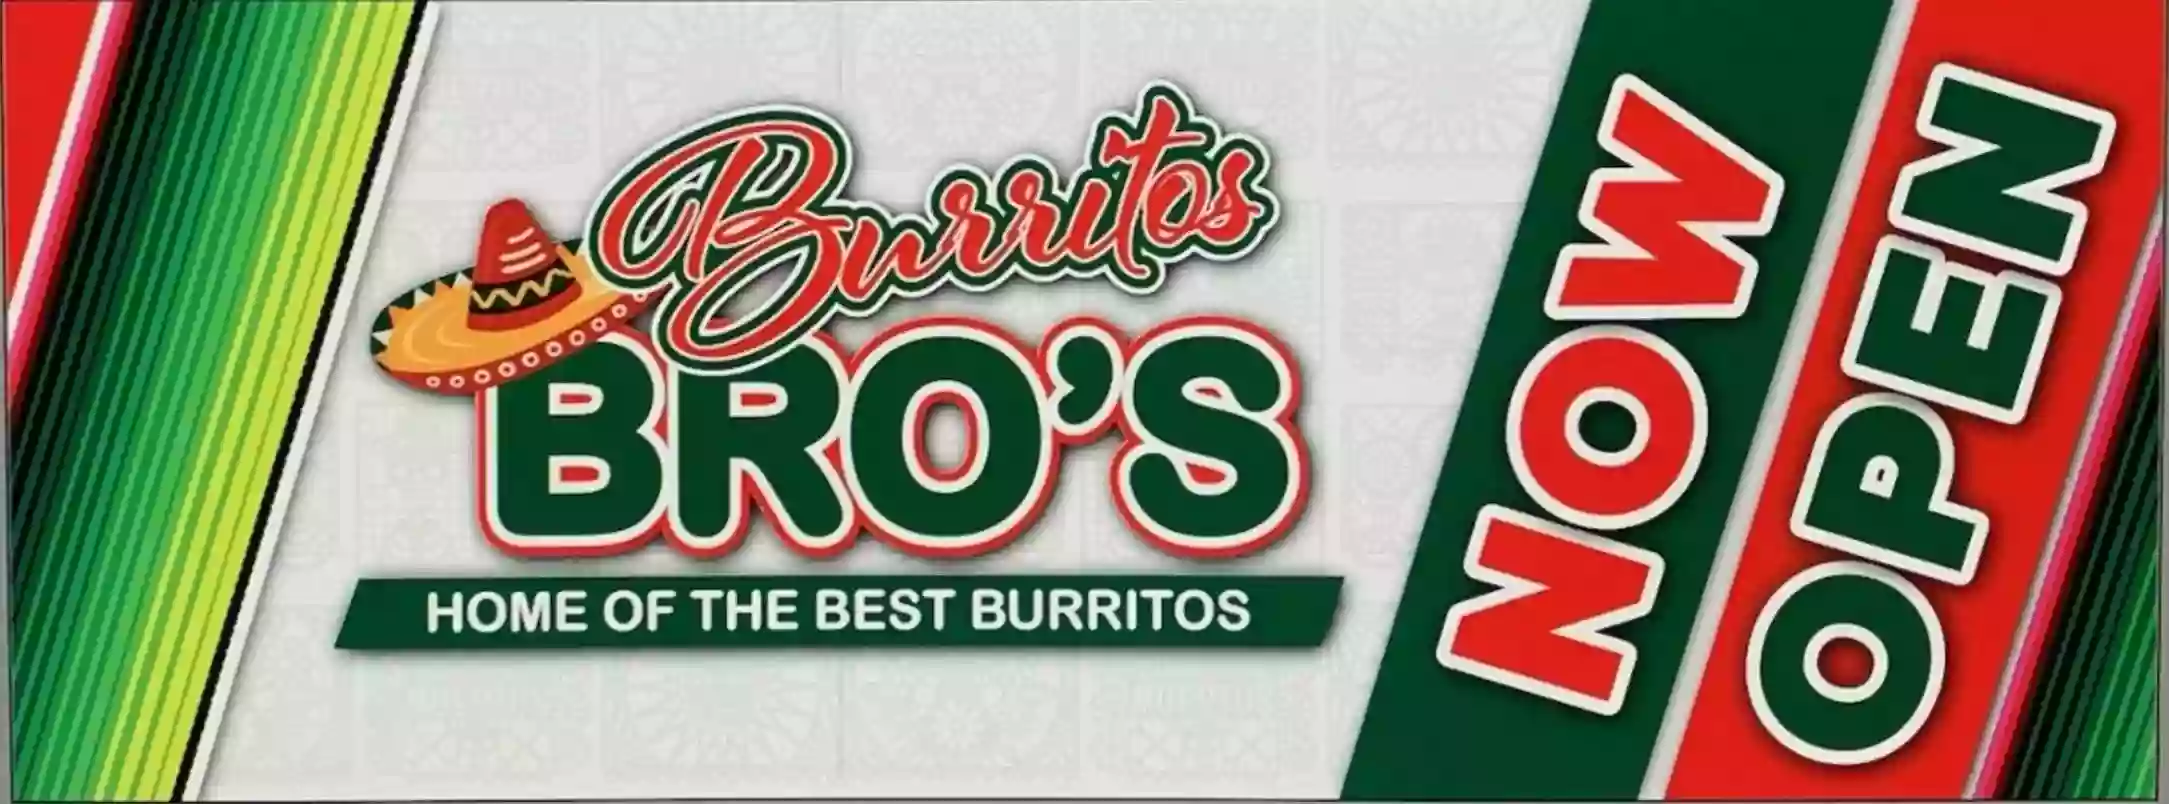 Burritos Bros Falls Church